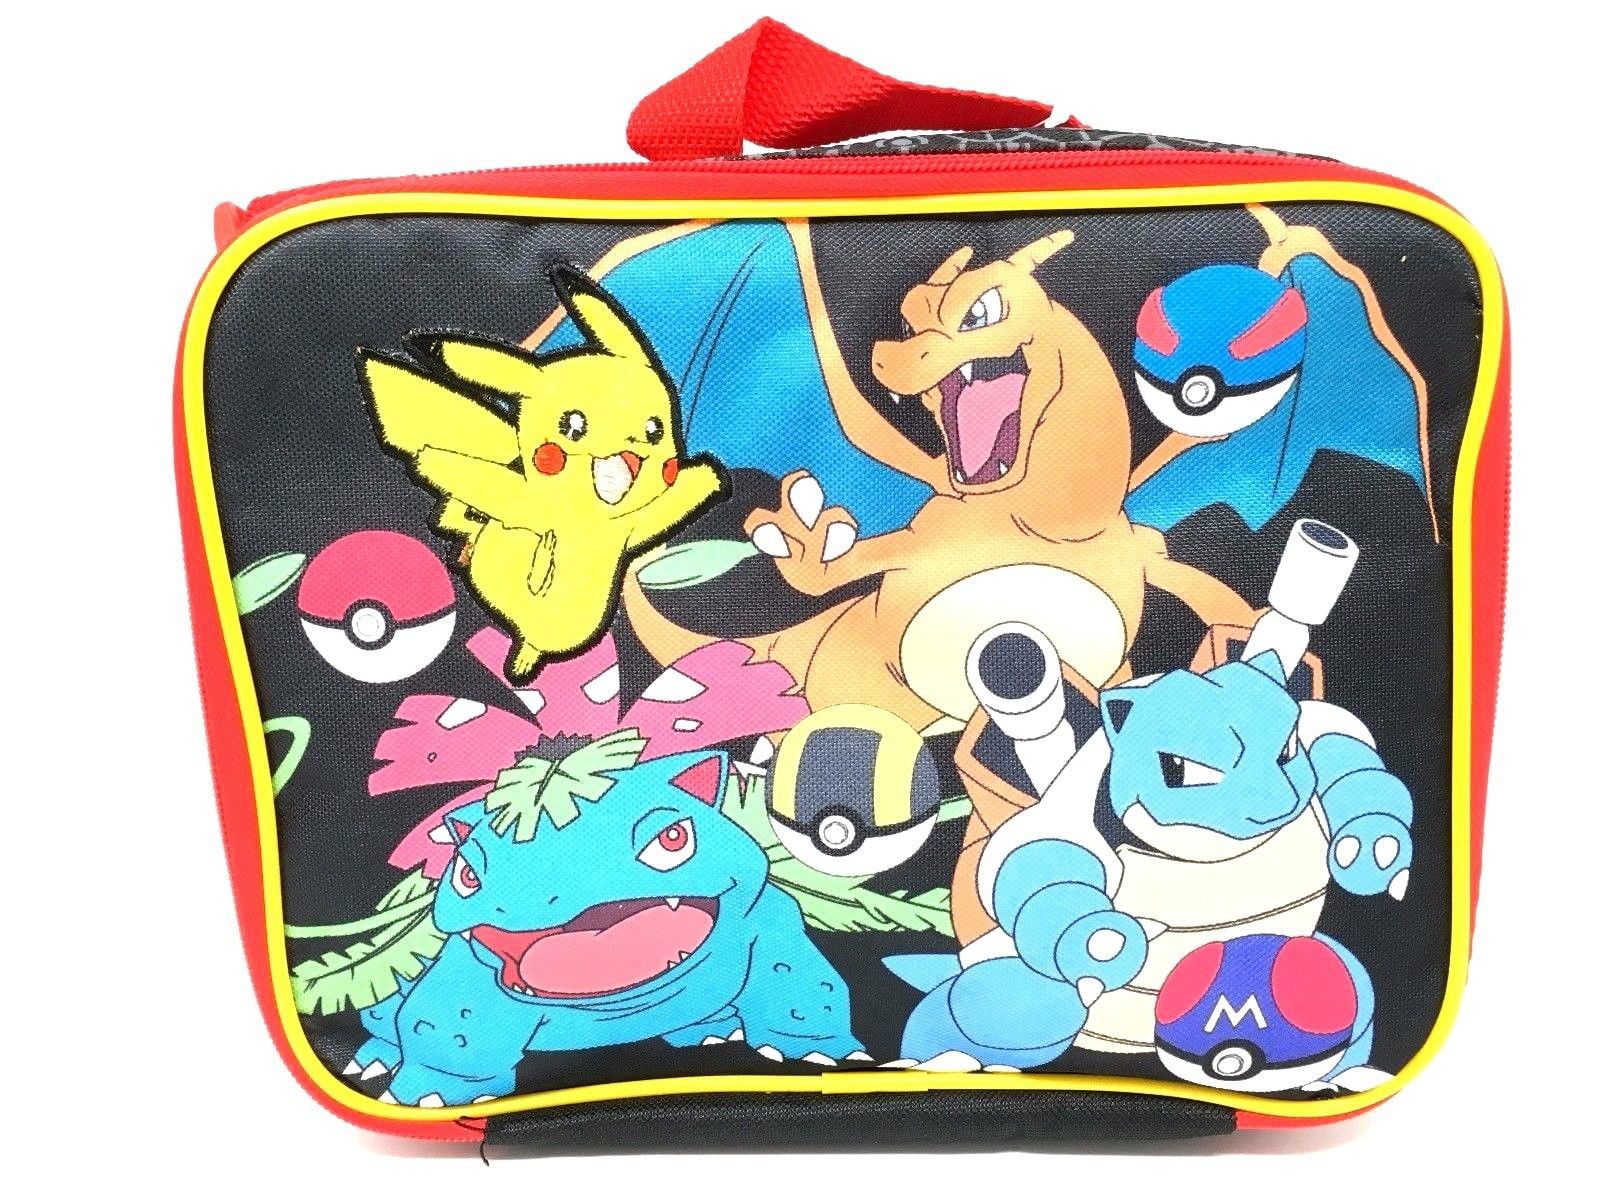 New Arrive 2017 Pokemon Pikachu Black & Red School Lunch Bag - Walmart.com